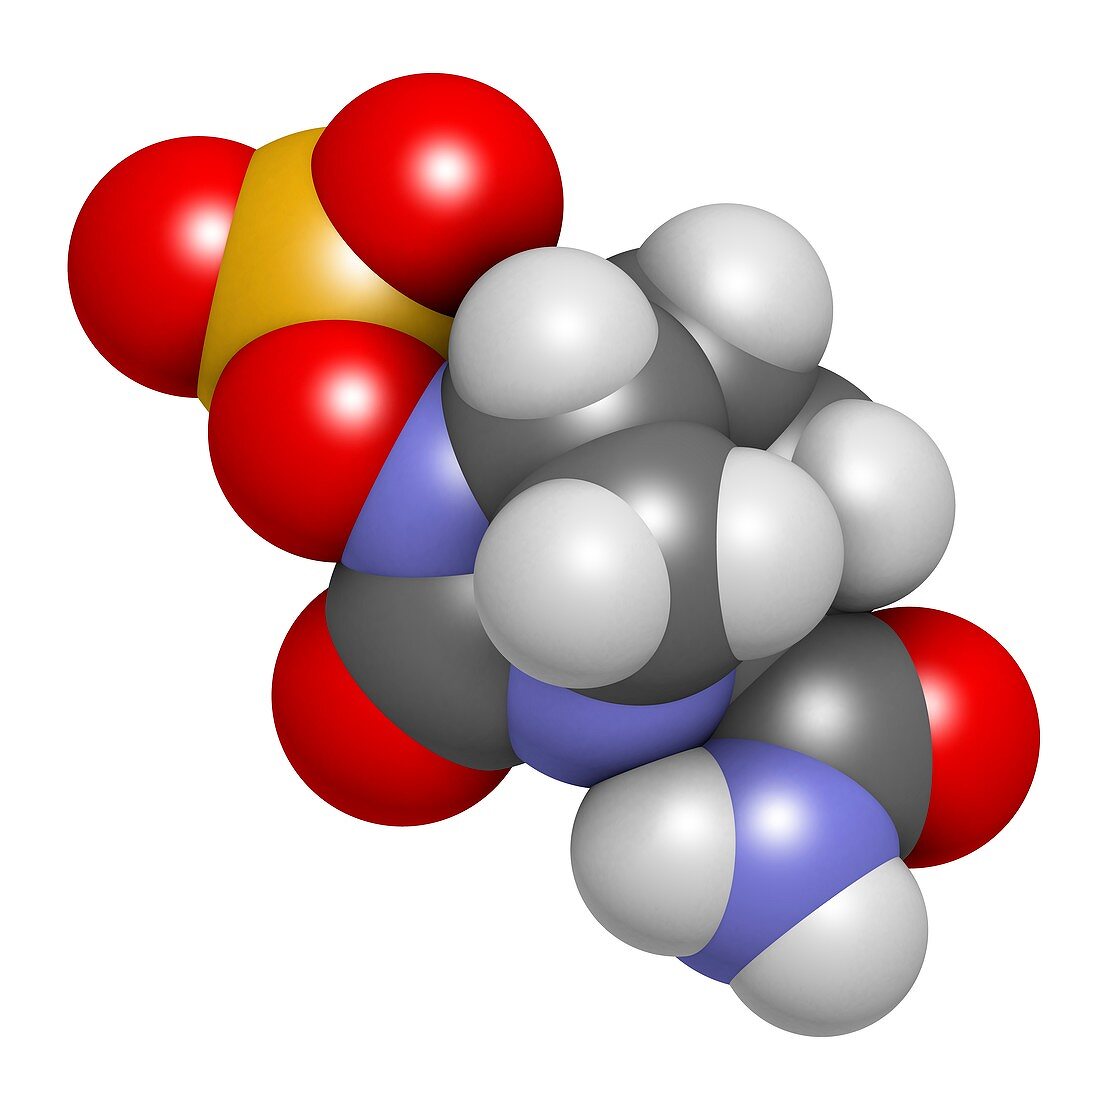 Avibactam drug molecule